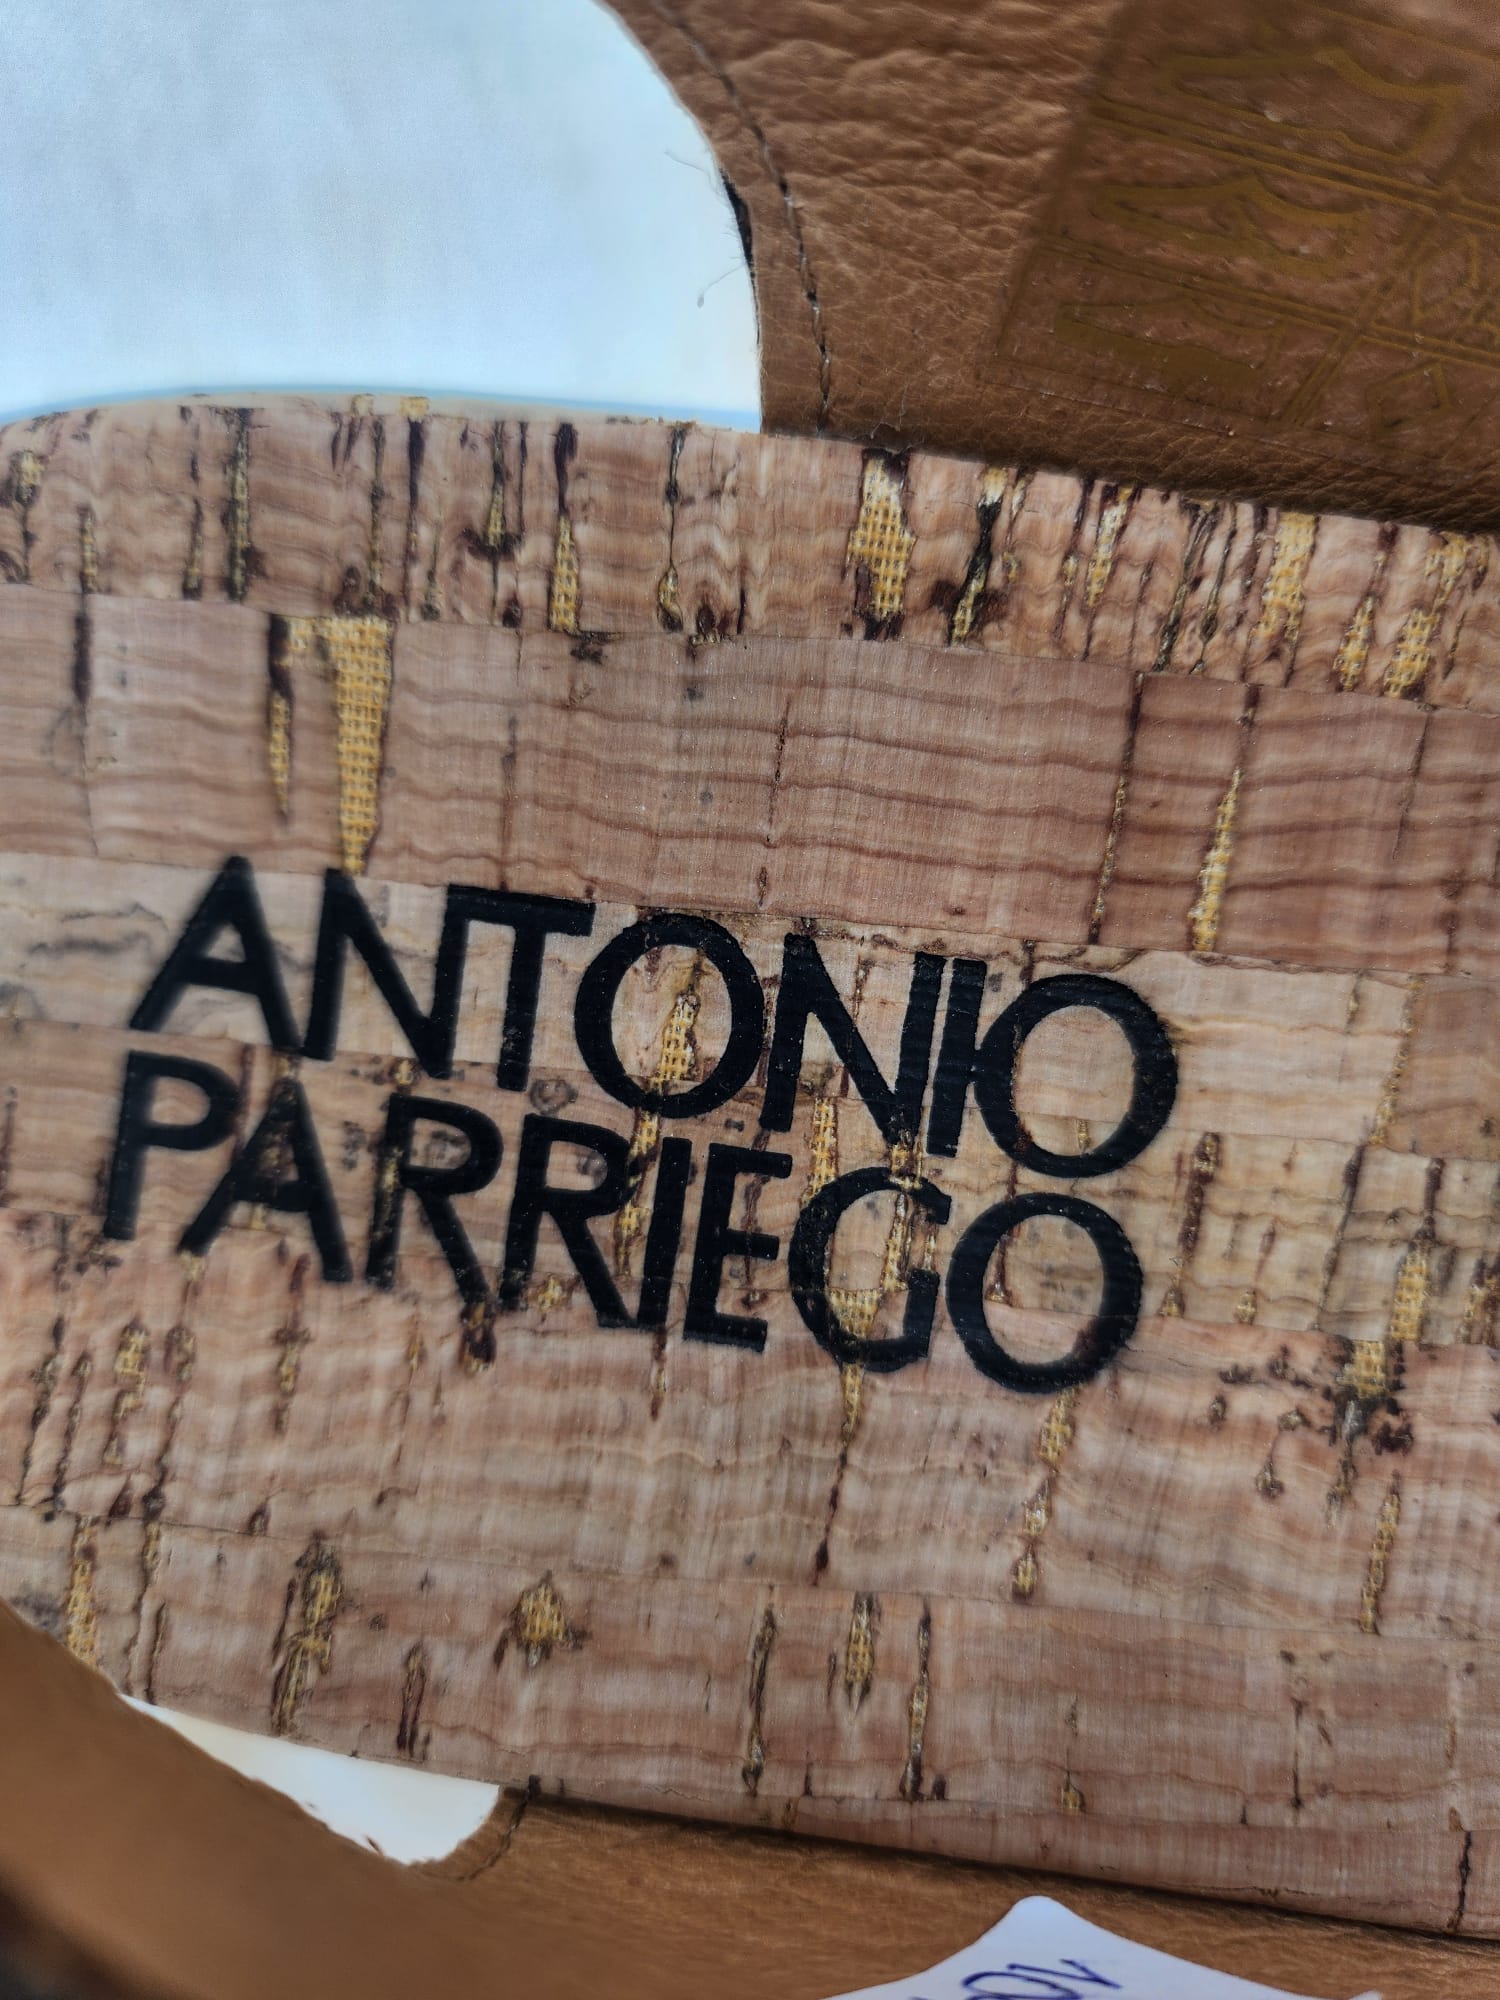 Antonio Parriego